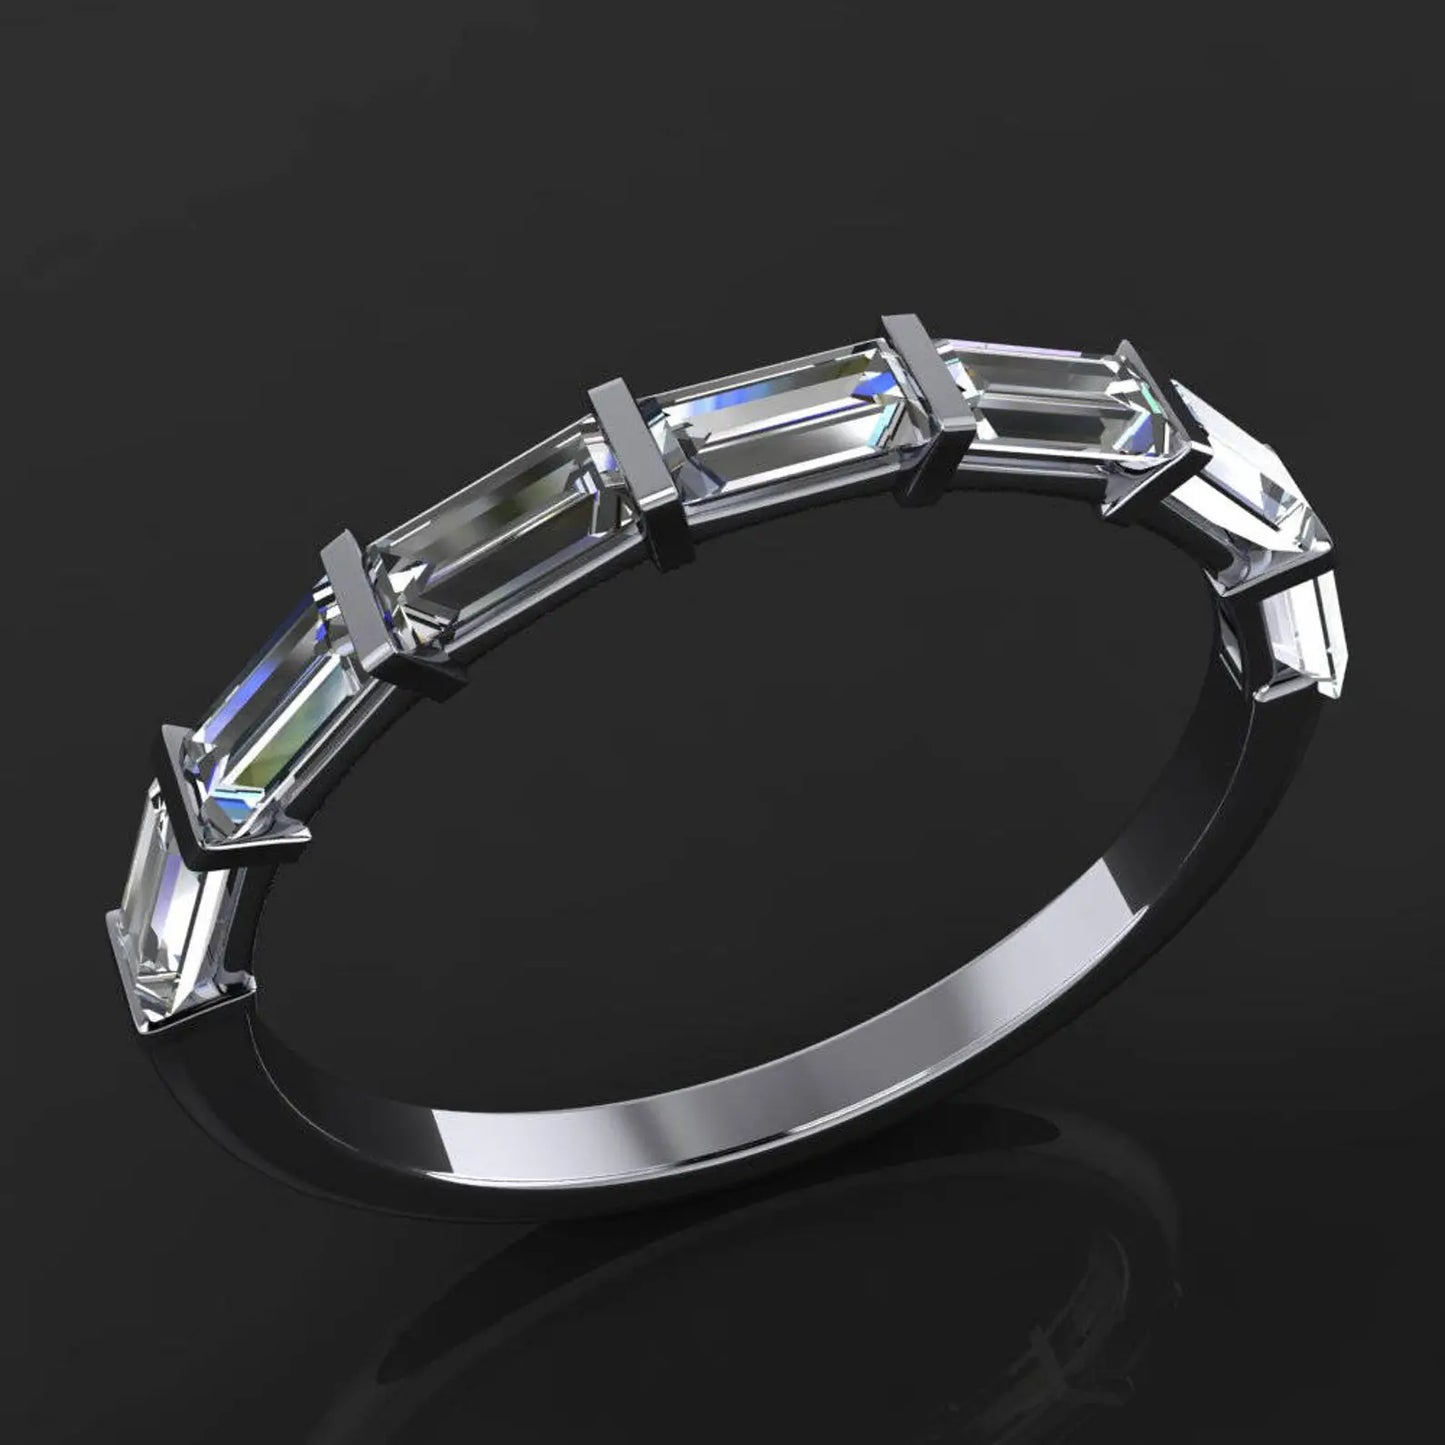 lexie ring – 1 carat moissanite anniversary band, ZAYA moissanite baguette ring - J Hollywood Designs